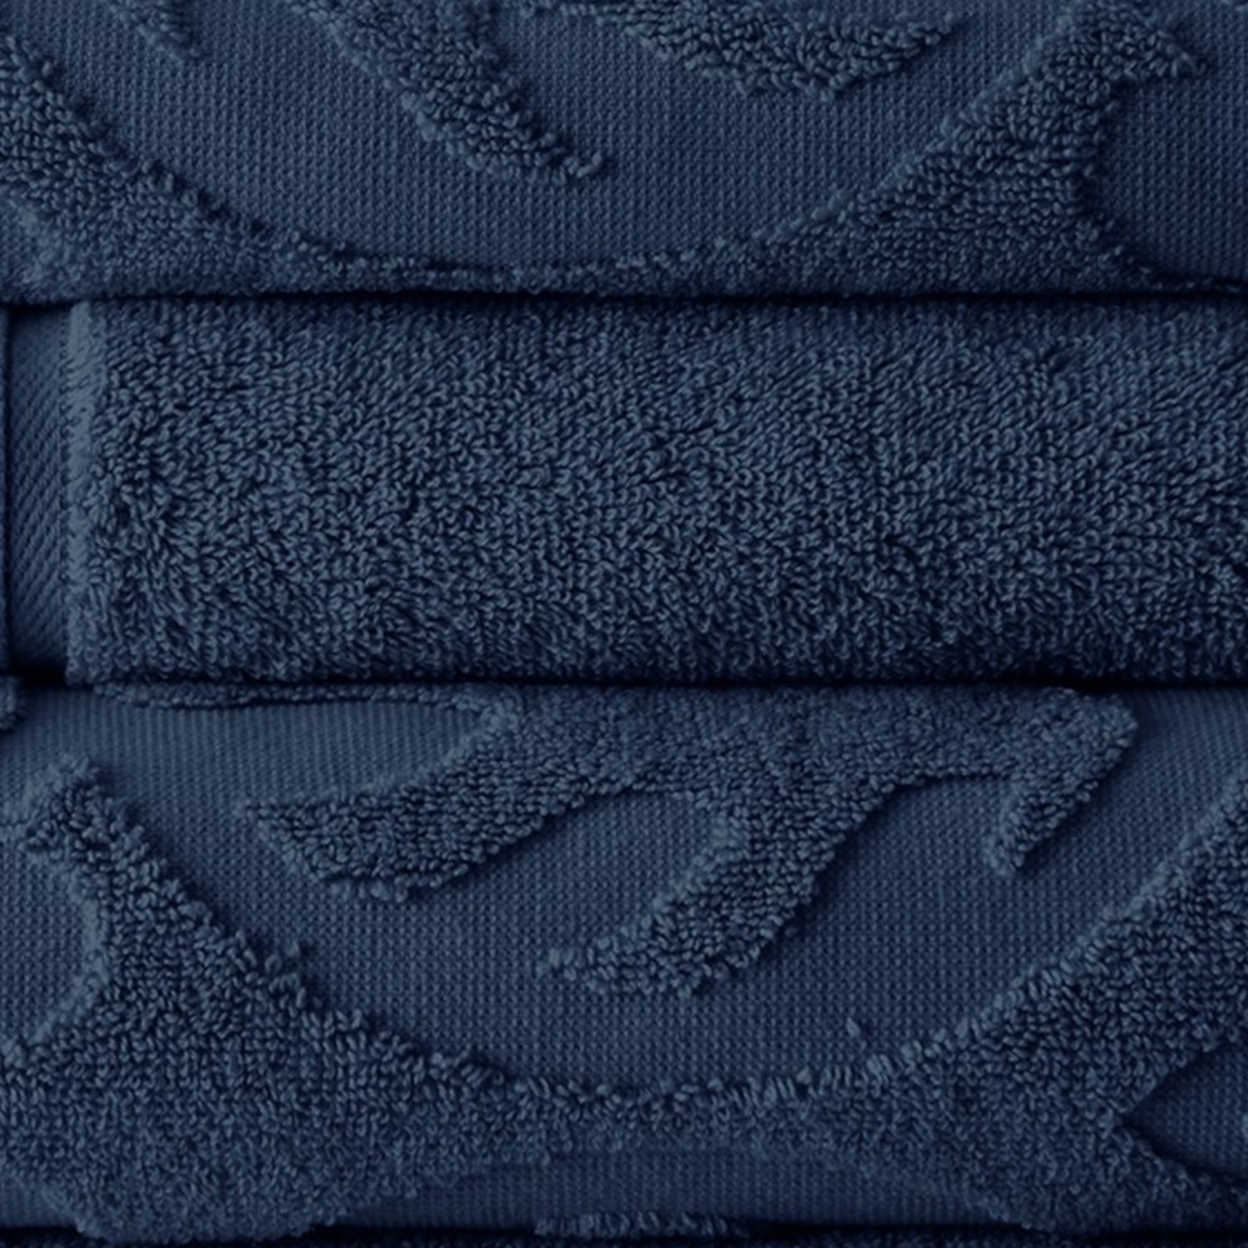 Oya 6 Piece Soft Egyptian Cotton Towel Set, Medallion Pattern, Navy Blue- Saltoro Sherpi